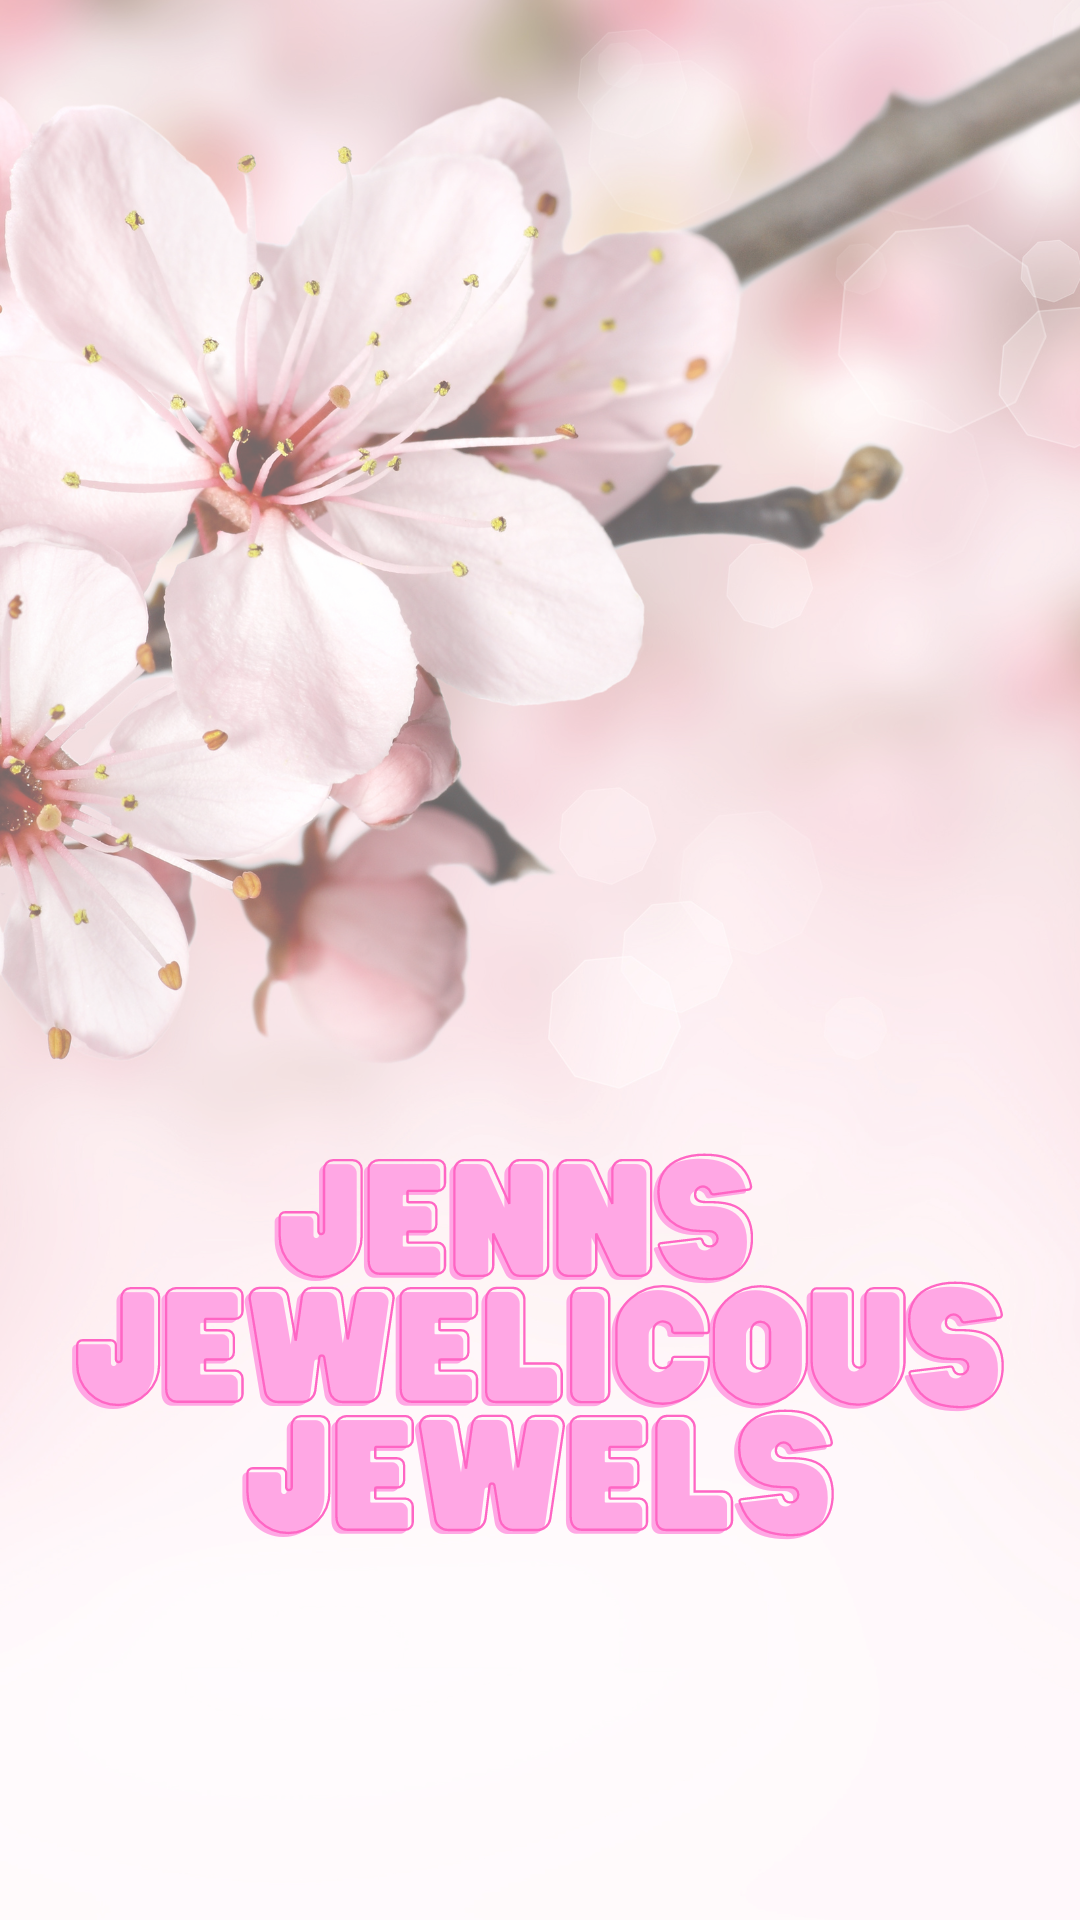 jenns jewelicious jewels